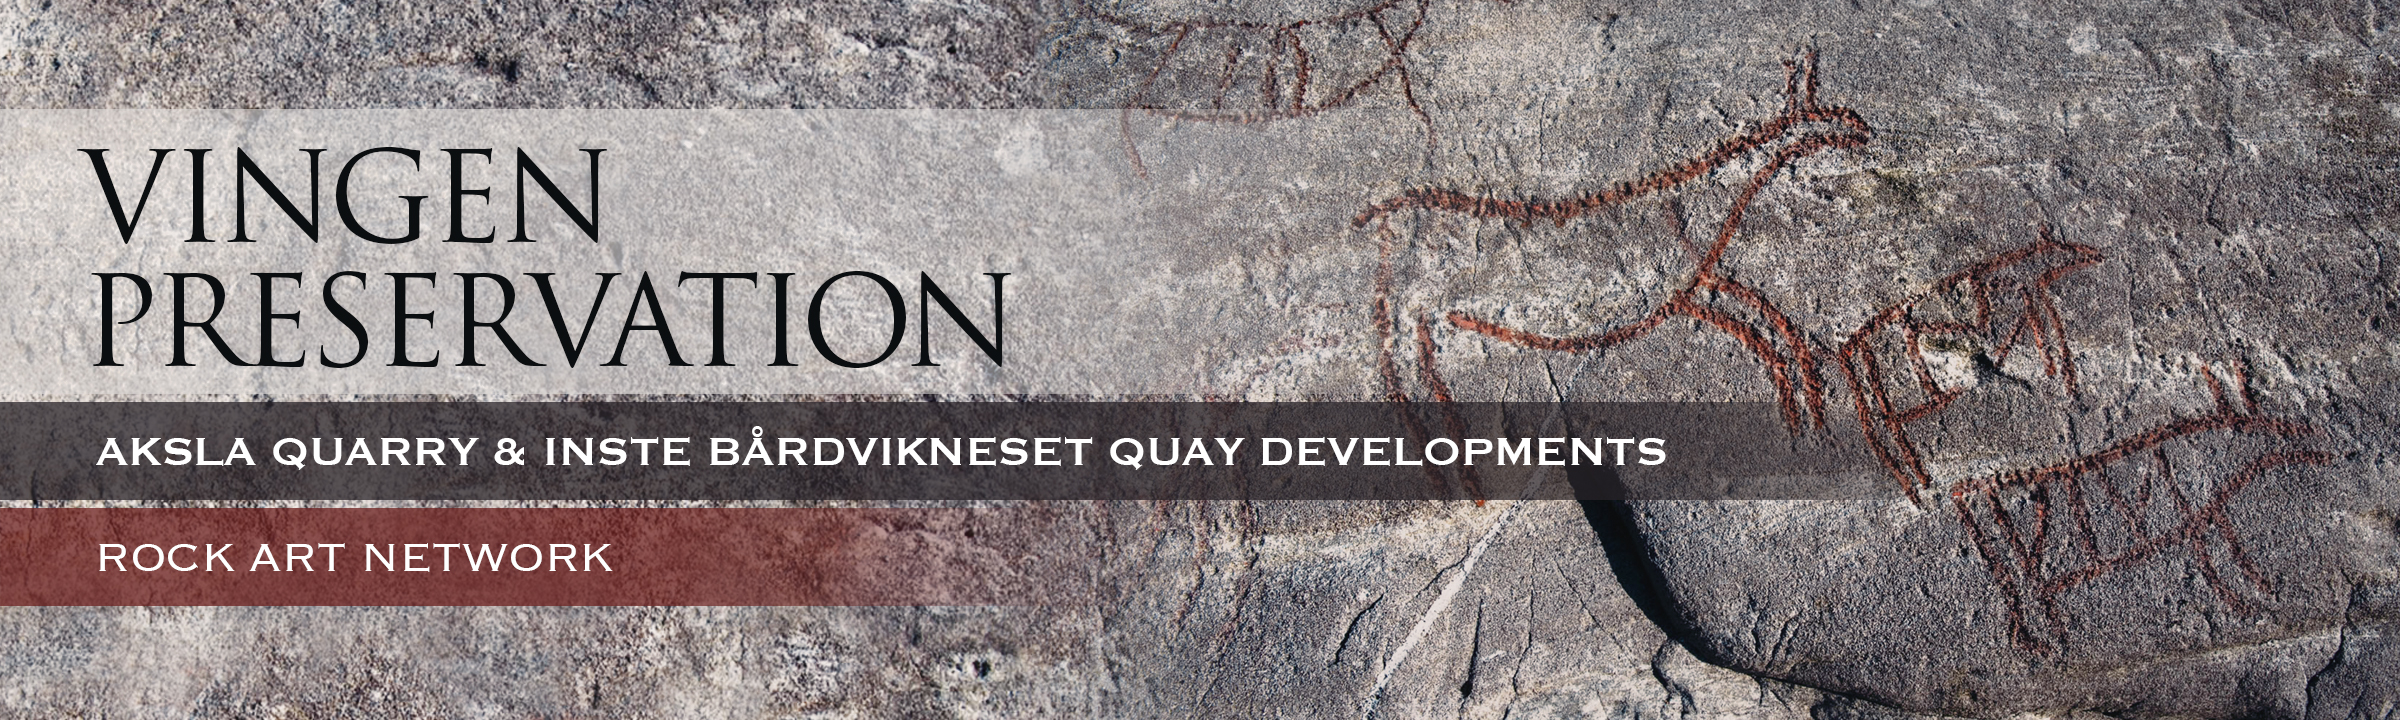 Paul Taçon - Griffith University letter regarding the Aksla quarry and Inste Bårdvikneset quay developments in Norway